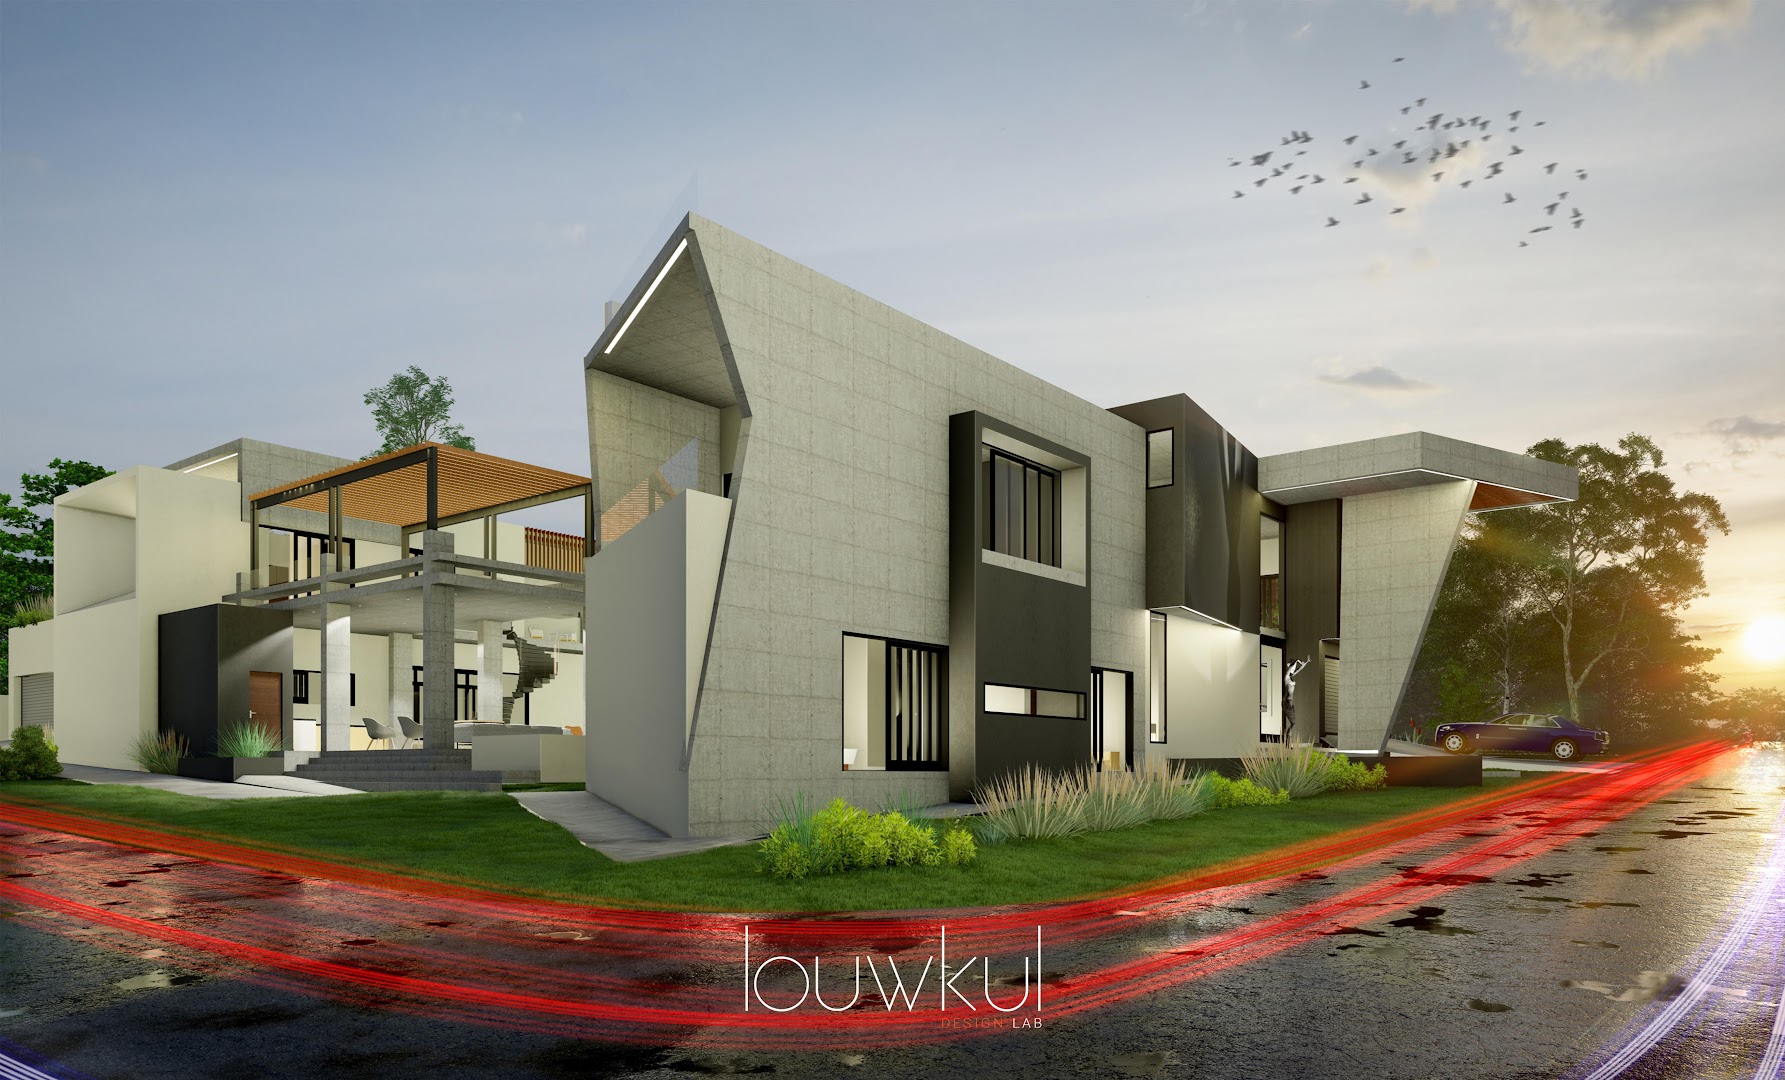 Louwkul Design Lab